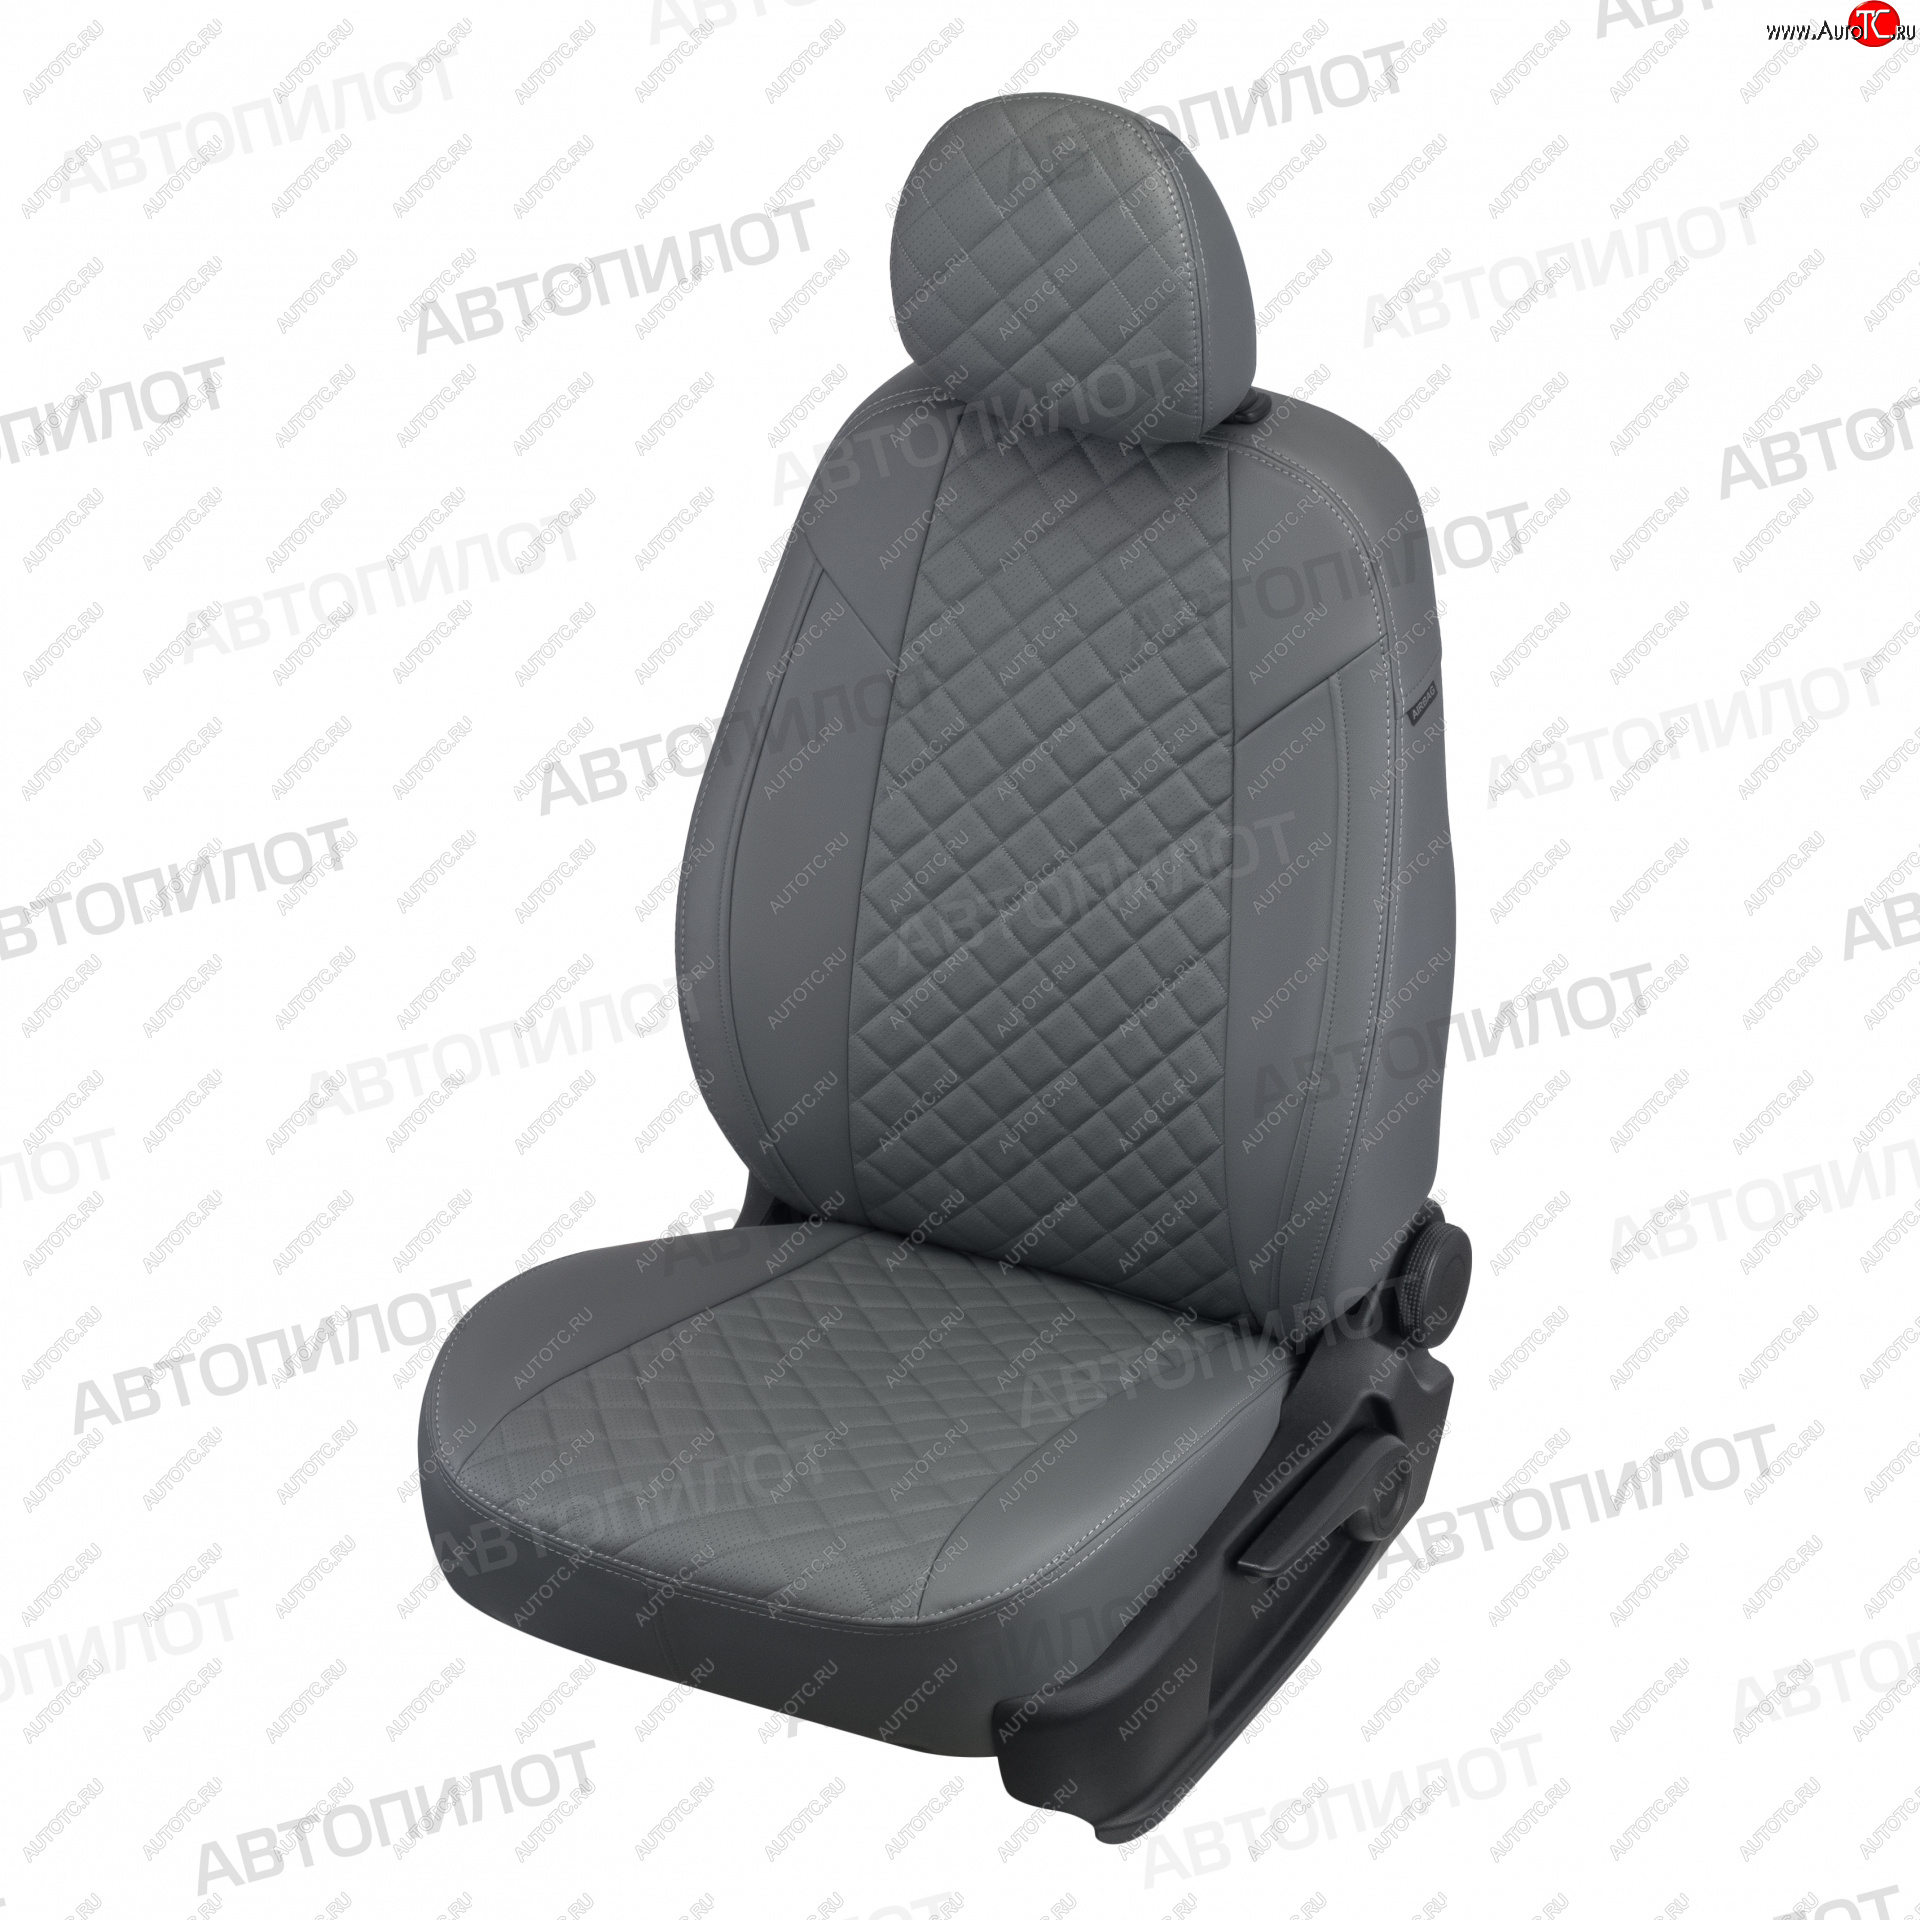 13 999 р. Чехлы сидений (экокожа) Автопилот Ромб  Chevrolet Rezzo (2000-2008) (серый)